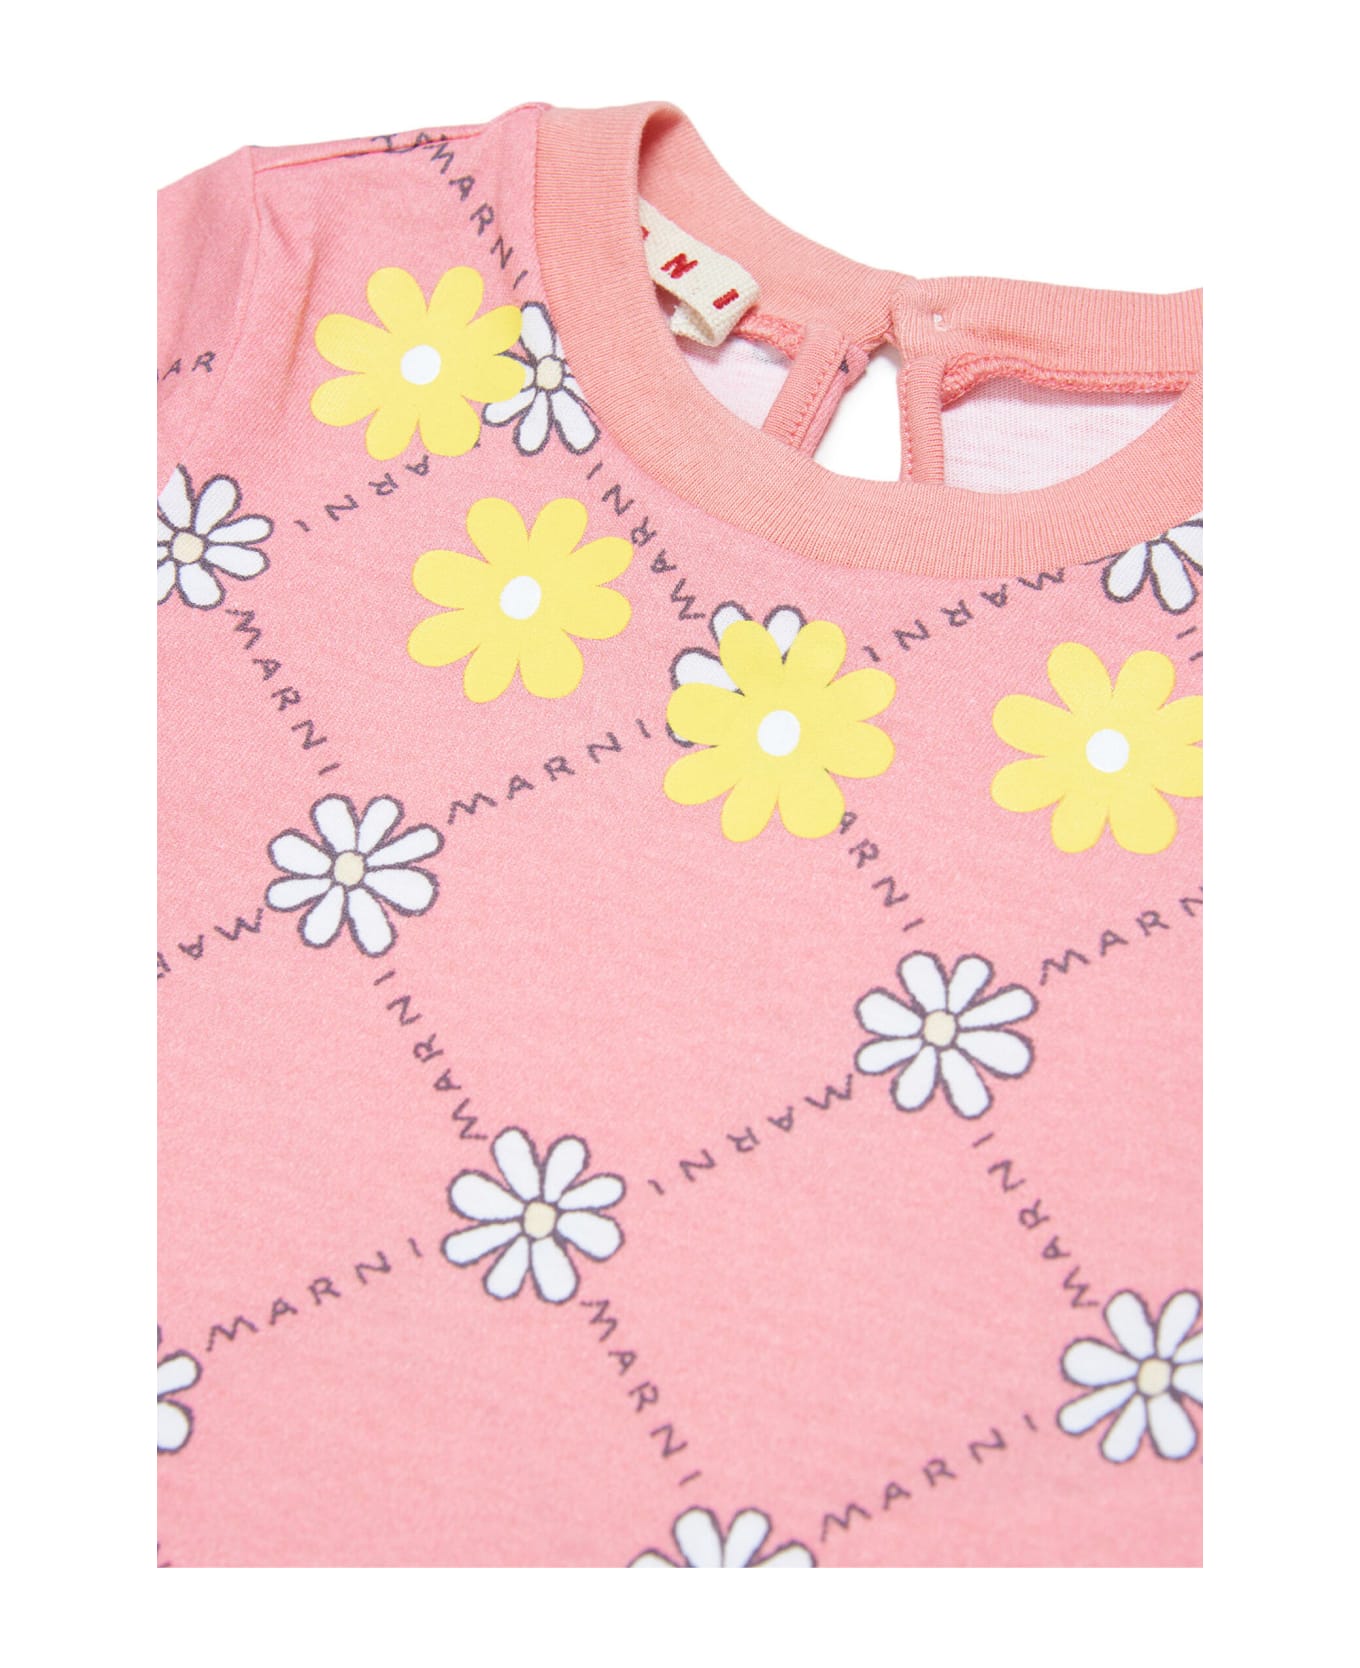 Marni Mt57b T-shirt Marni Peach Pink Cotton T-shirt With Daisy Pattern - Peach blossom